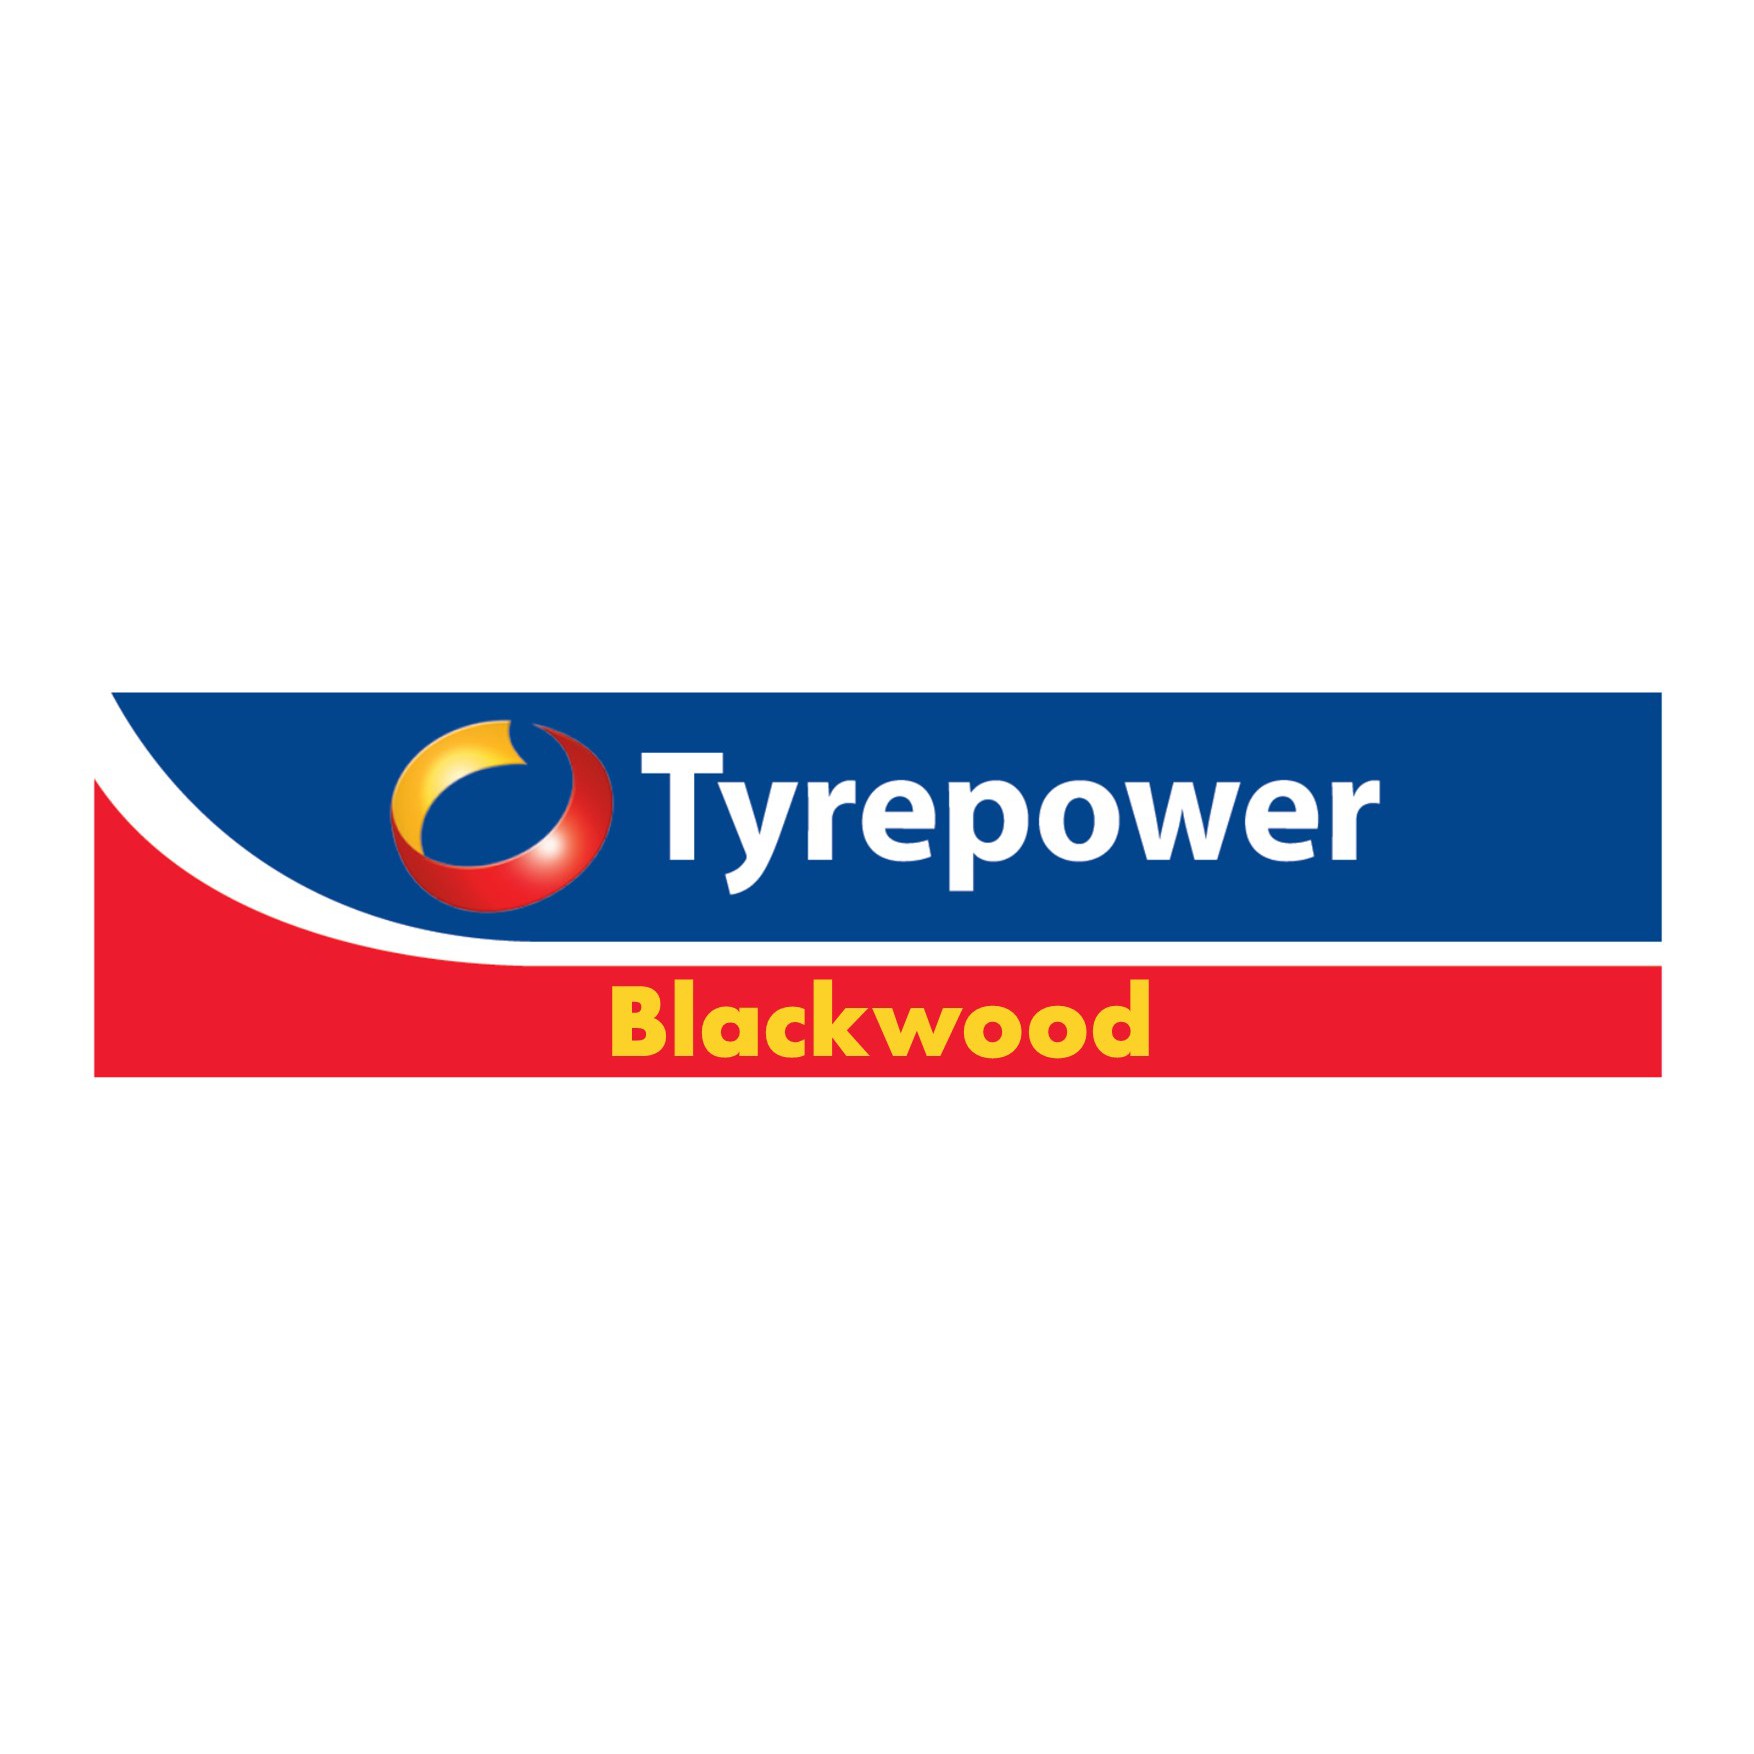 Tyrepower Blackwood - Blackwood, SA 5051 - (08) 8370 2195 | ShowMeLocal.com